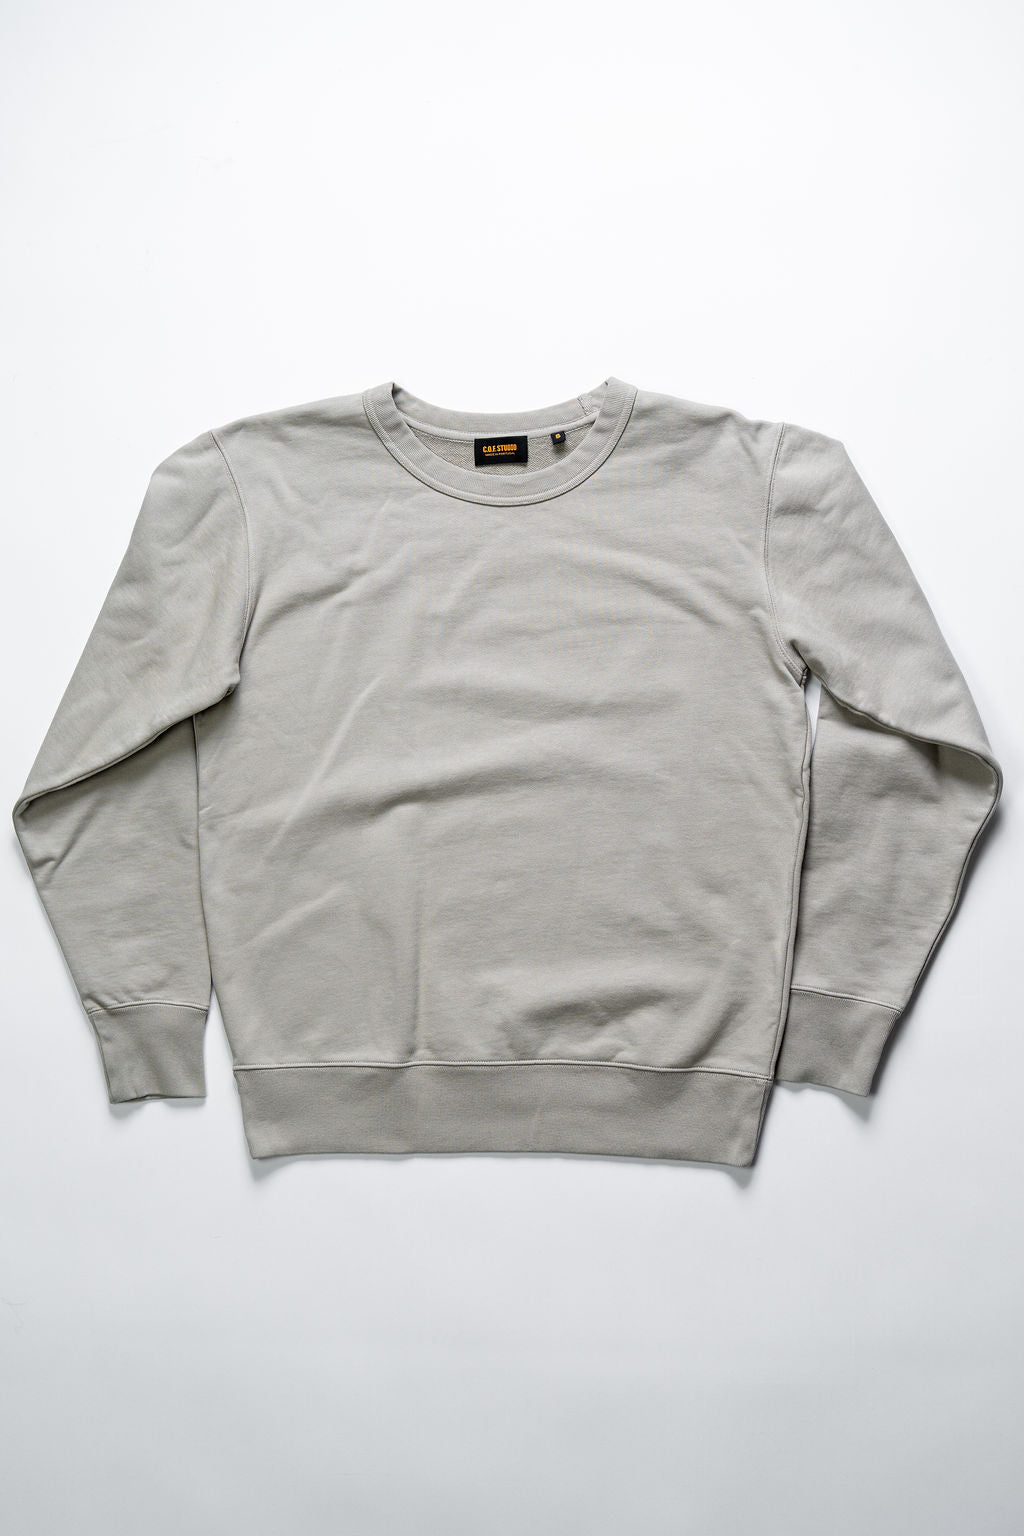 C.O.F. Studio Sweatshirt - Unbrushed Terry Cement